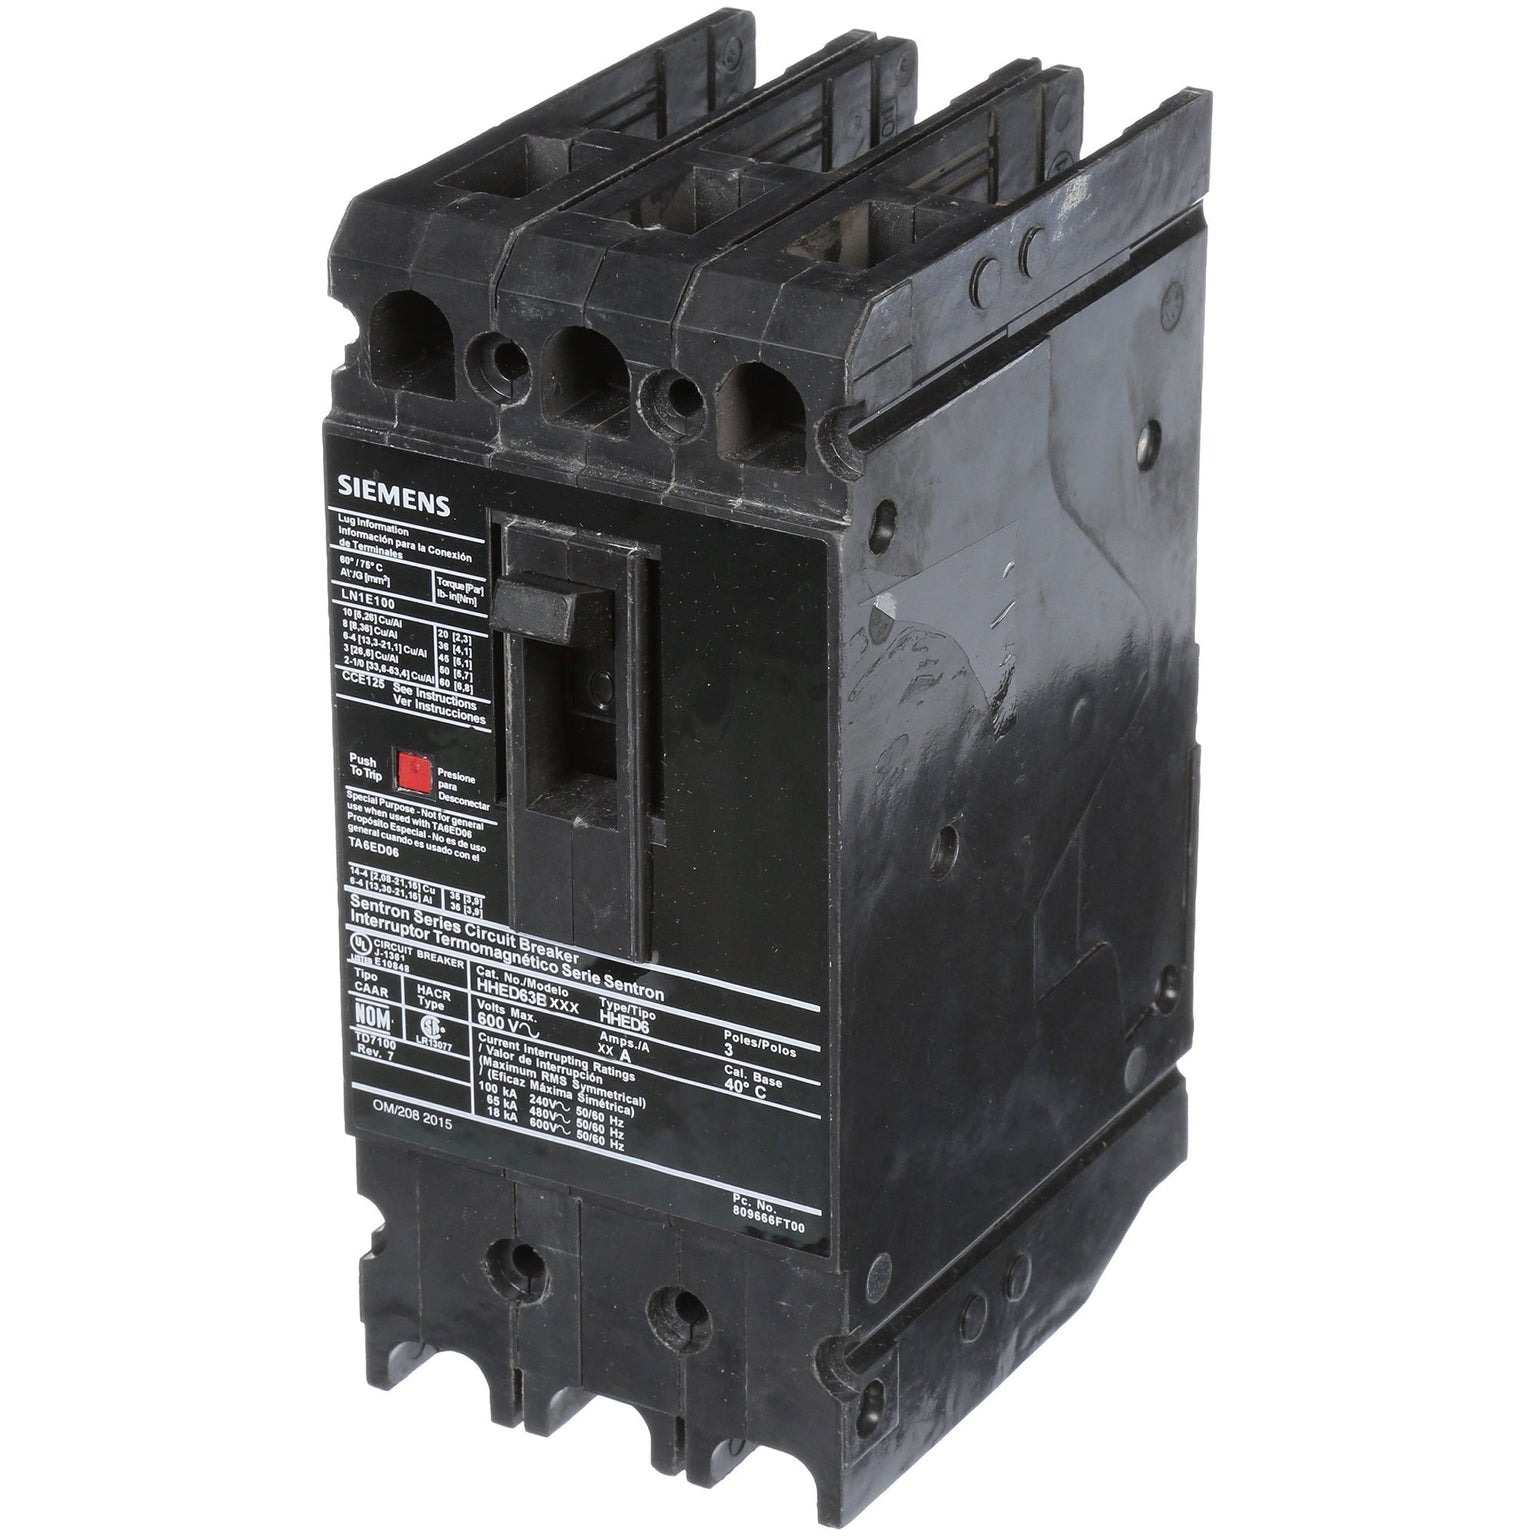 HHED63B015L - Siemens - 15 Amp Molded Case Circuit Breaker